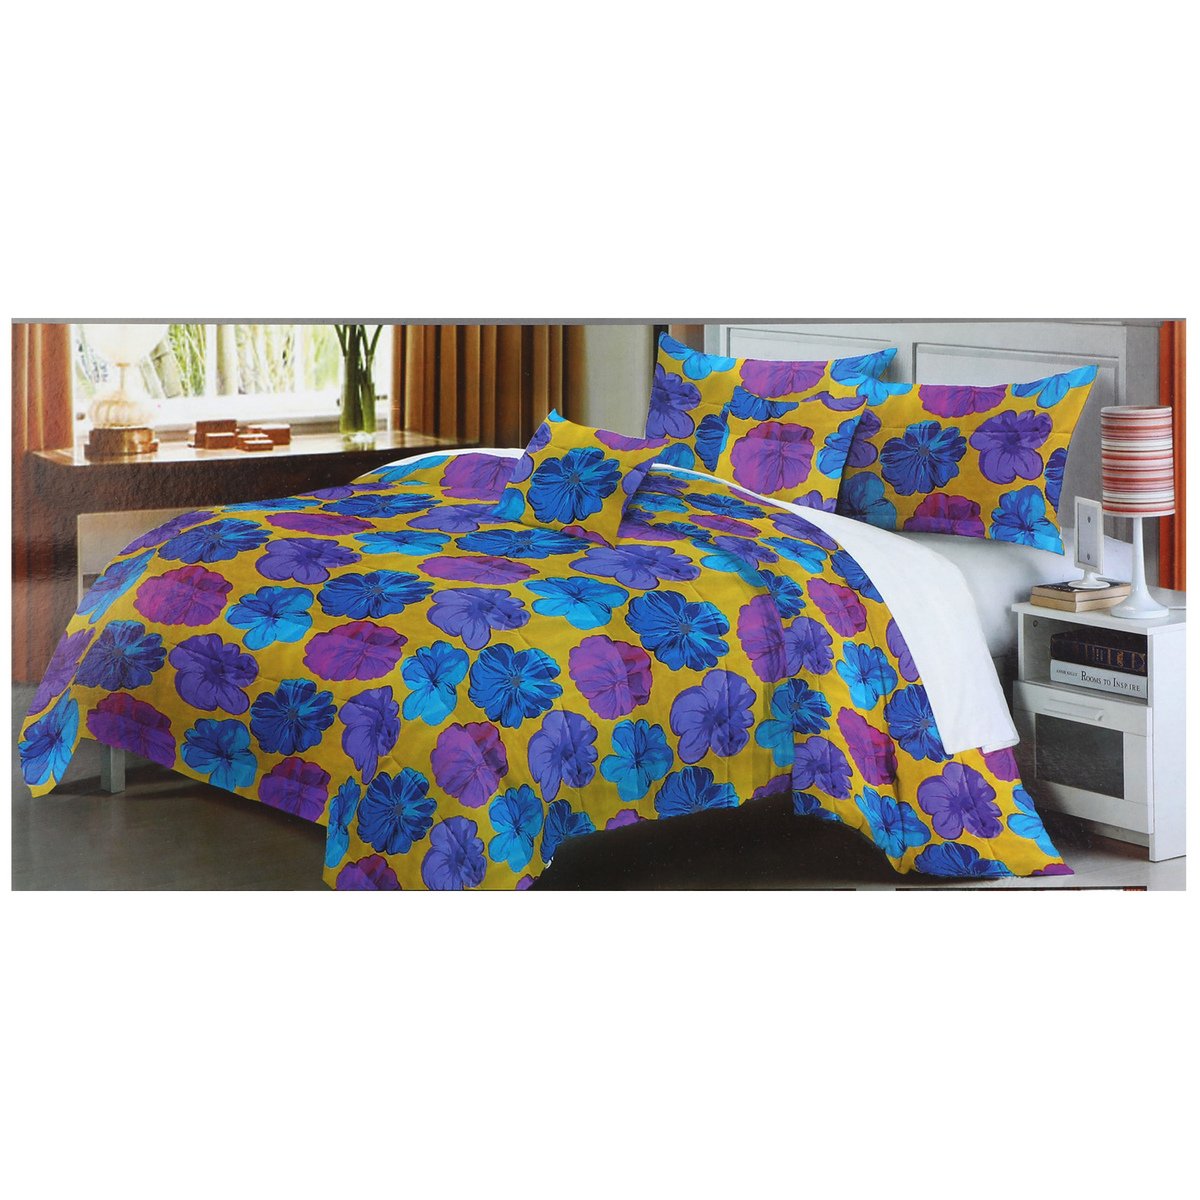 Homewell Comforter Double 4pcs Set Assorted